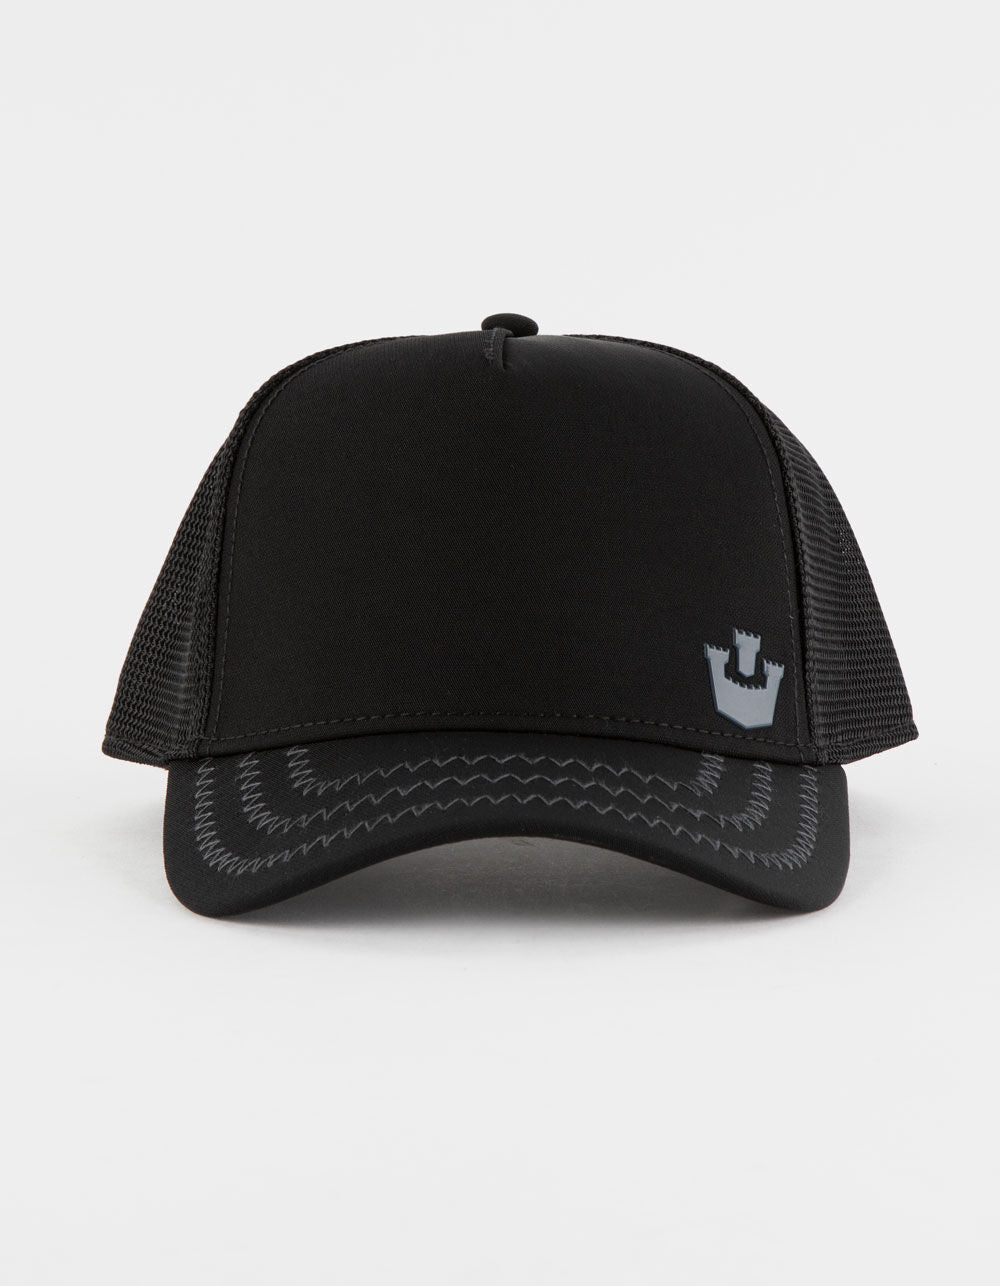 Goorin Bros Gateway Snapback Trucker Hat "Black"